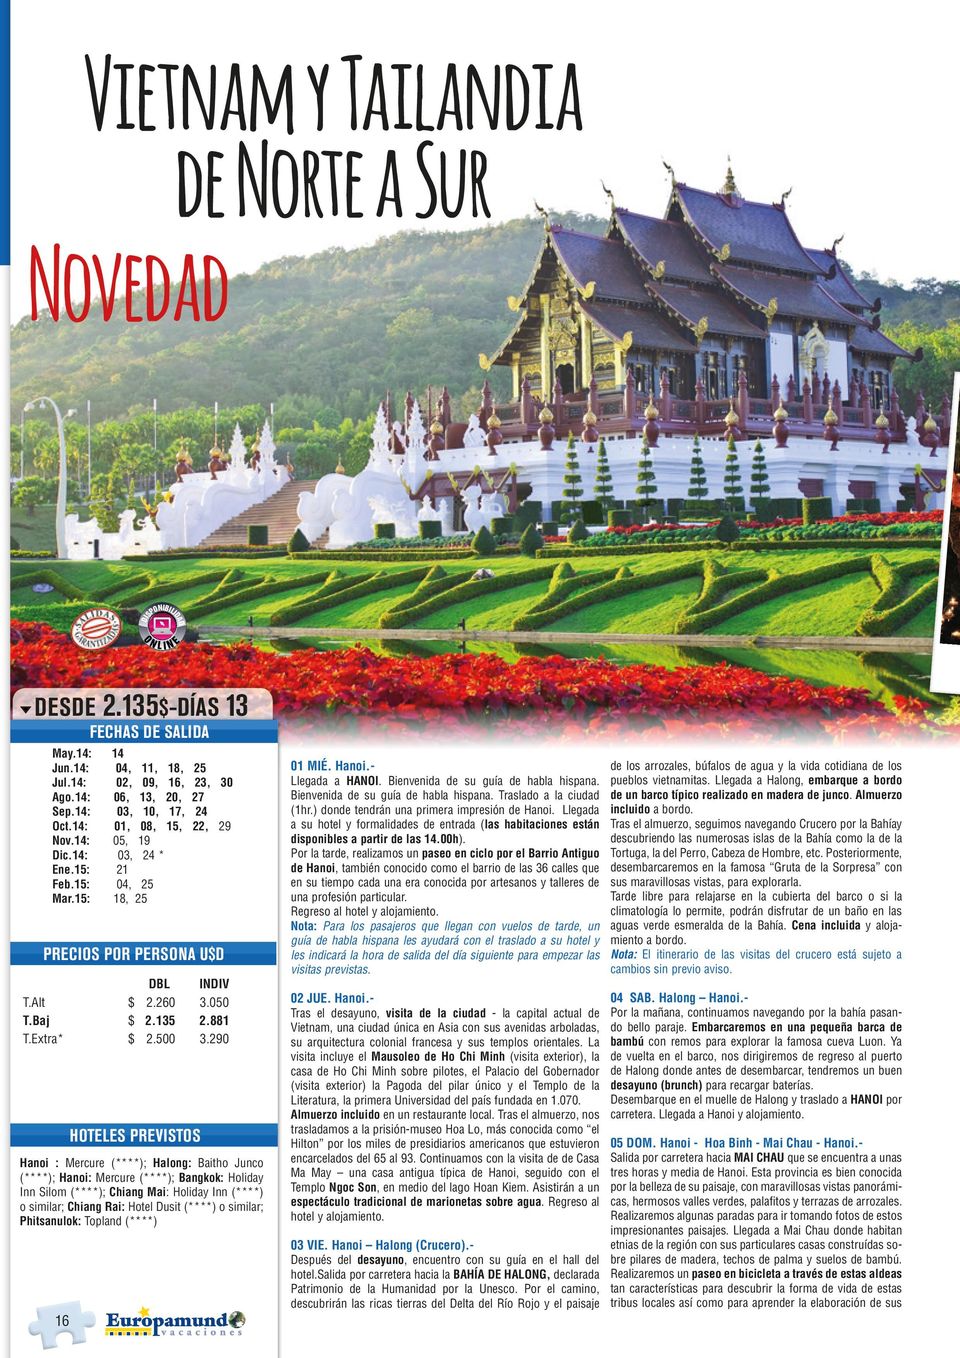 90 HOTELES PREVISTOS Hanoi : Mercure (****); Halong: Baitho Junco (****); Hanoi: Mercure (****); Bangkok: Holiday Inn Silom (****); Chiang Mai: Holiday Inn (****) o similar; Chiang Rai: Hotel Dusit